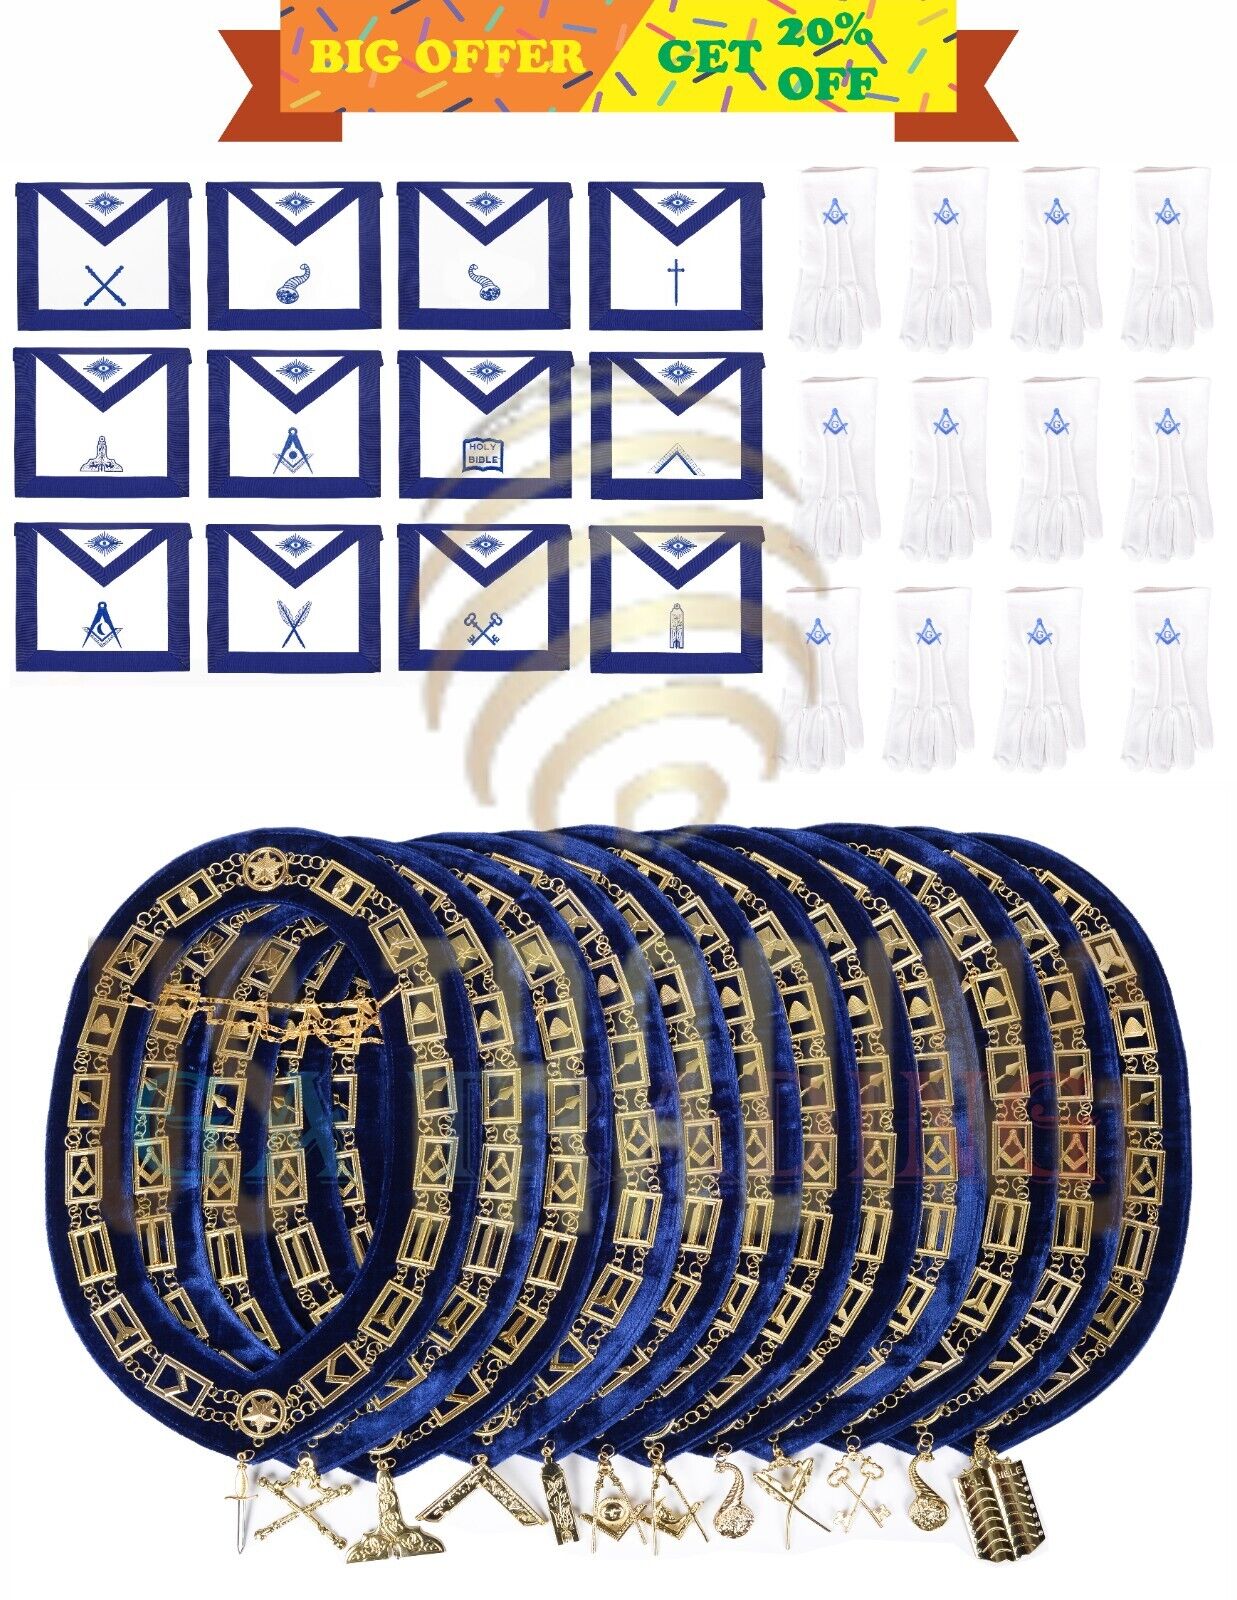 12 Pcs Masonic Freemasons Blue Lodge Aprons & Golden Chain Collar With Gloves